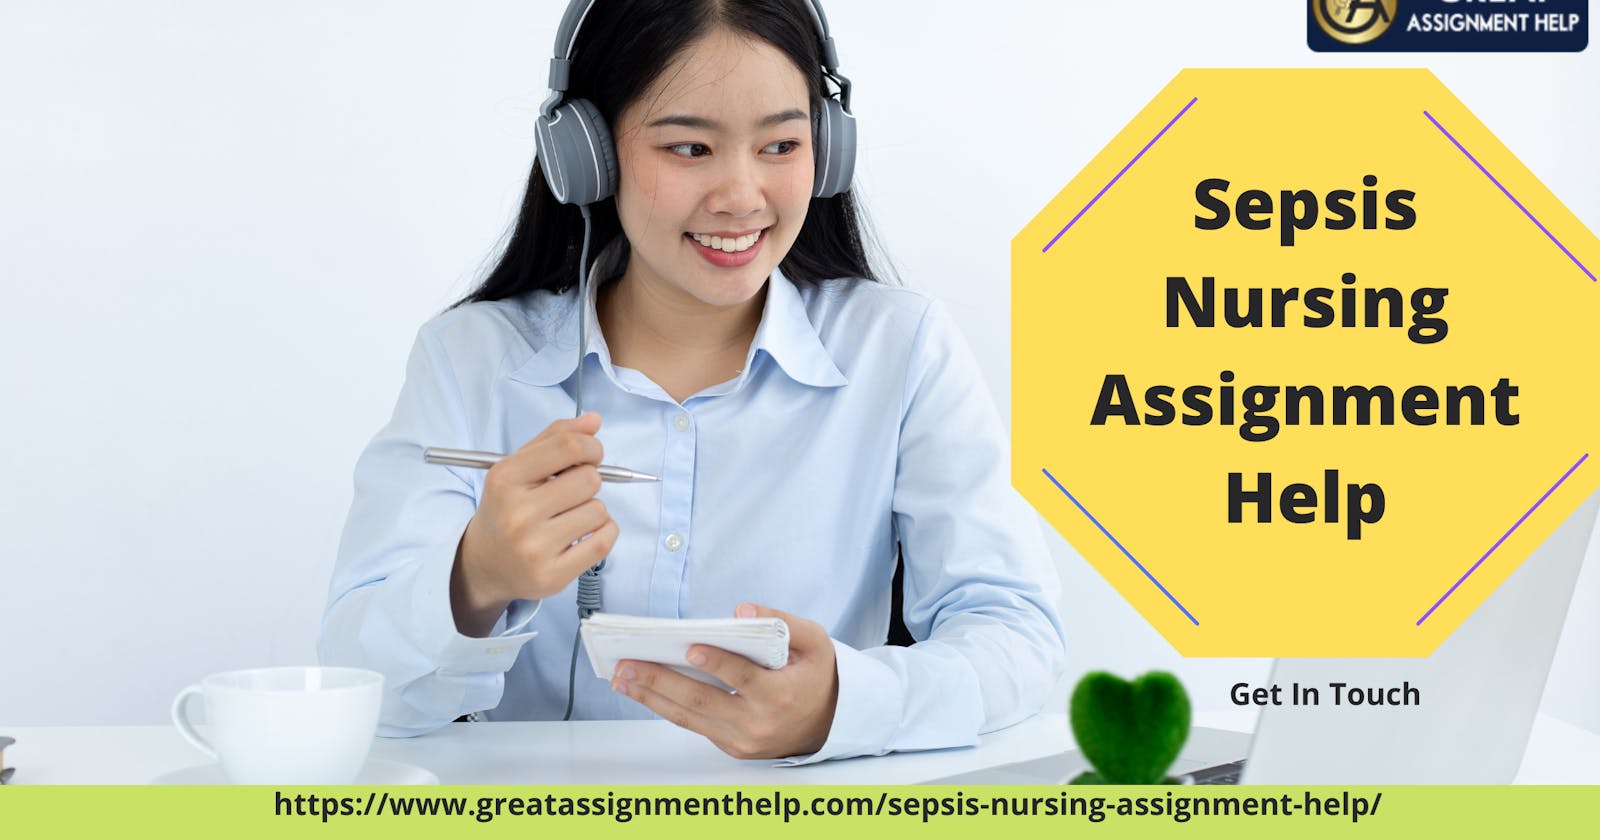 Get the Best Sepsis Nursing Assignment Help Services for Nursing Students